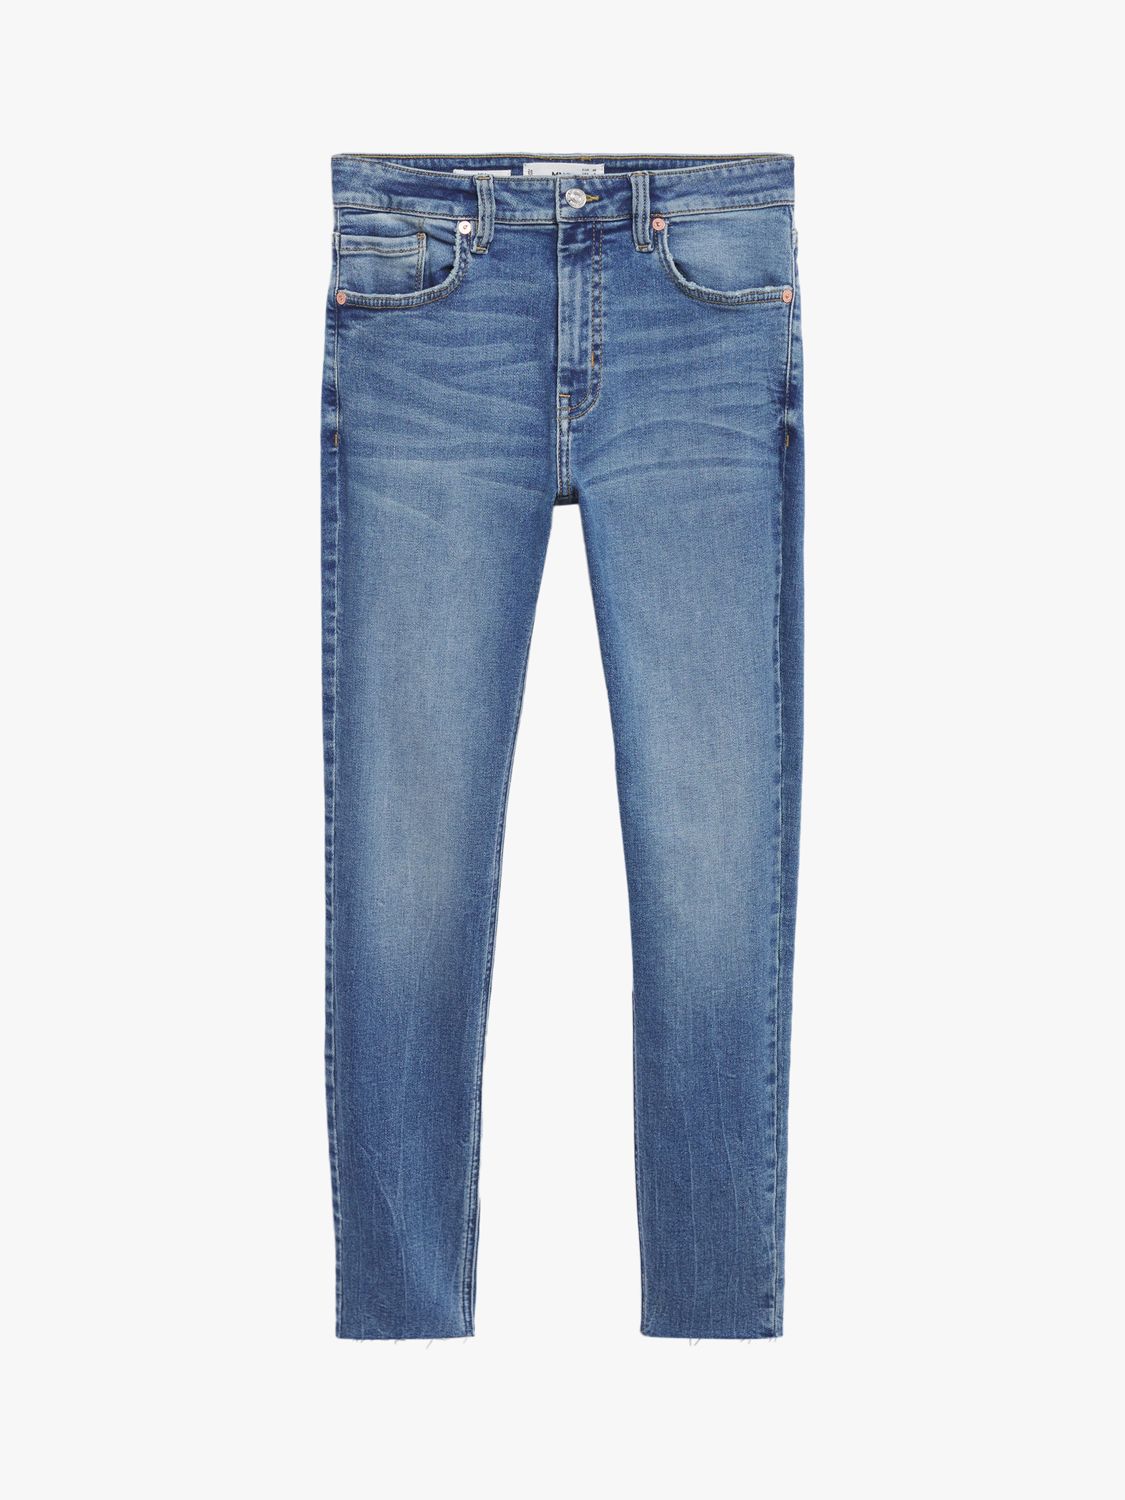 Mango Isa Crop Skinny Jeans, Blue at John Lewis & Partners